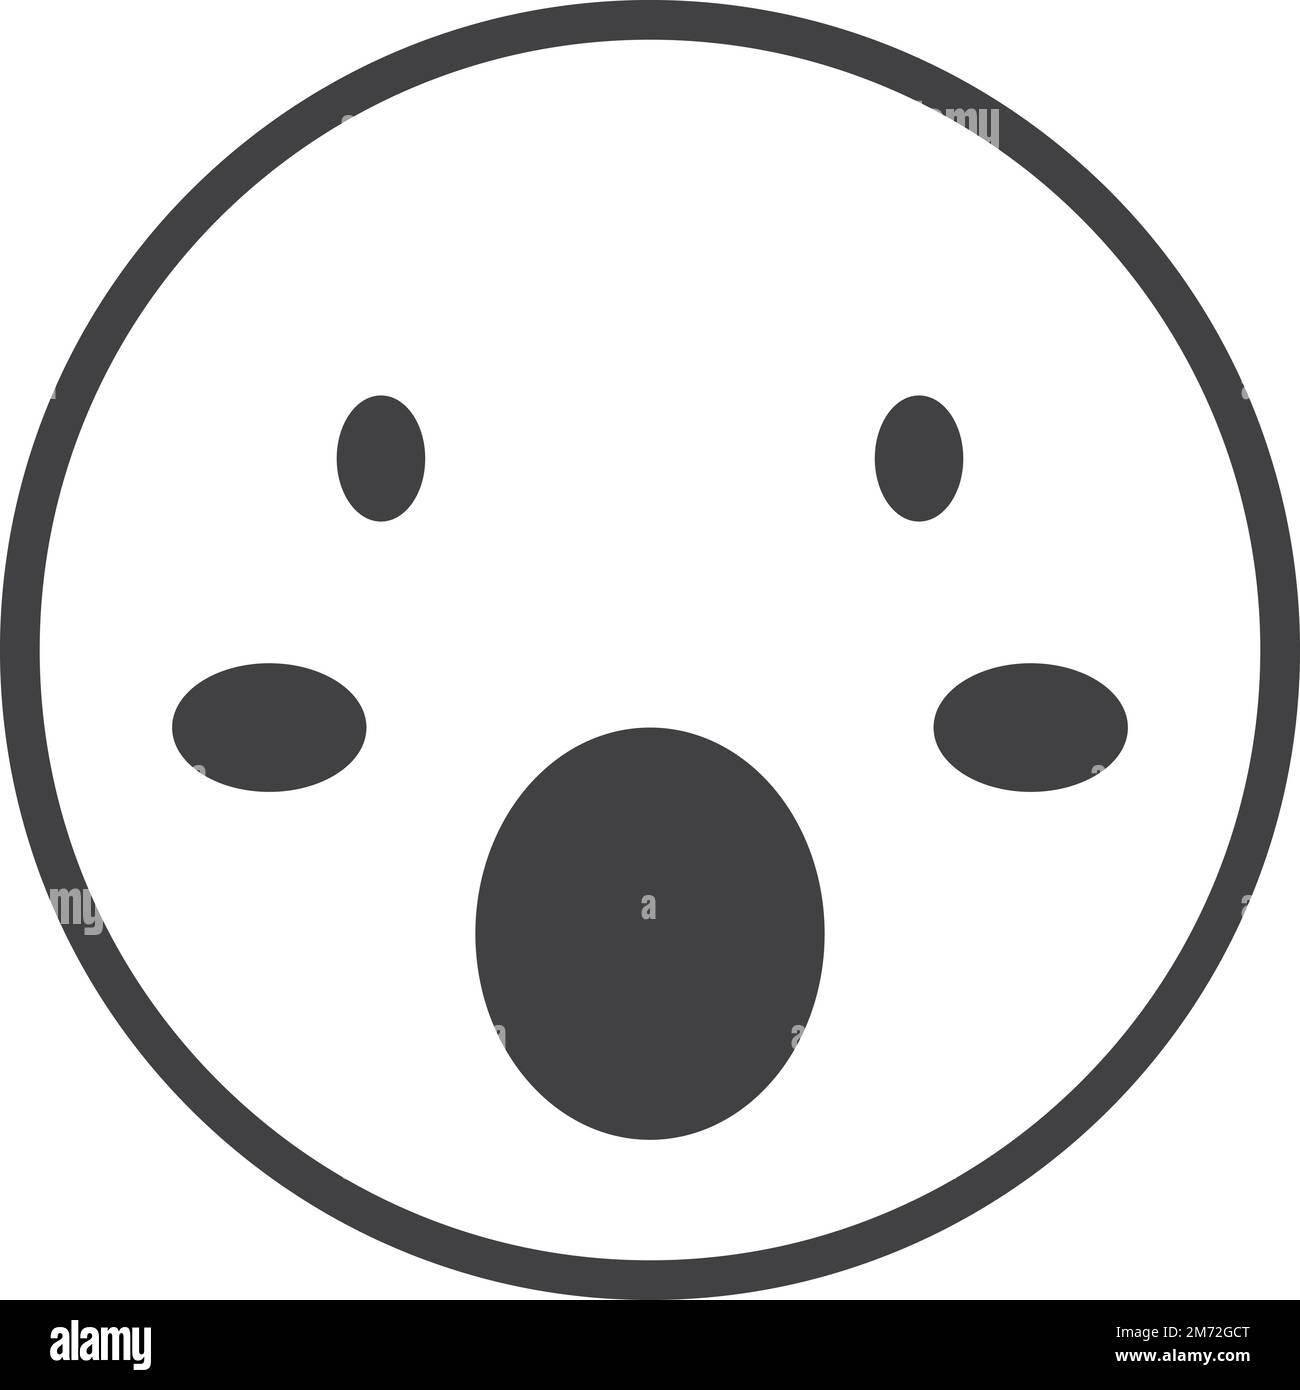 shocked face emoji illustration in minimal style isolated on background Stock Vector